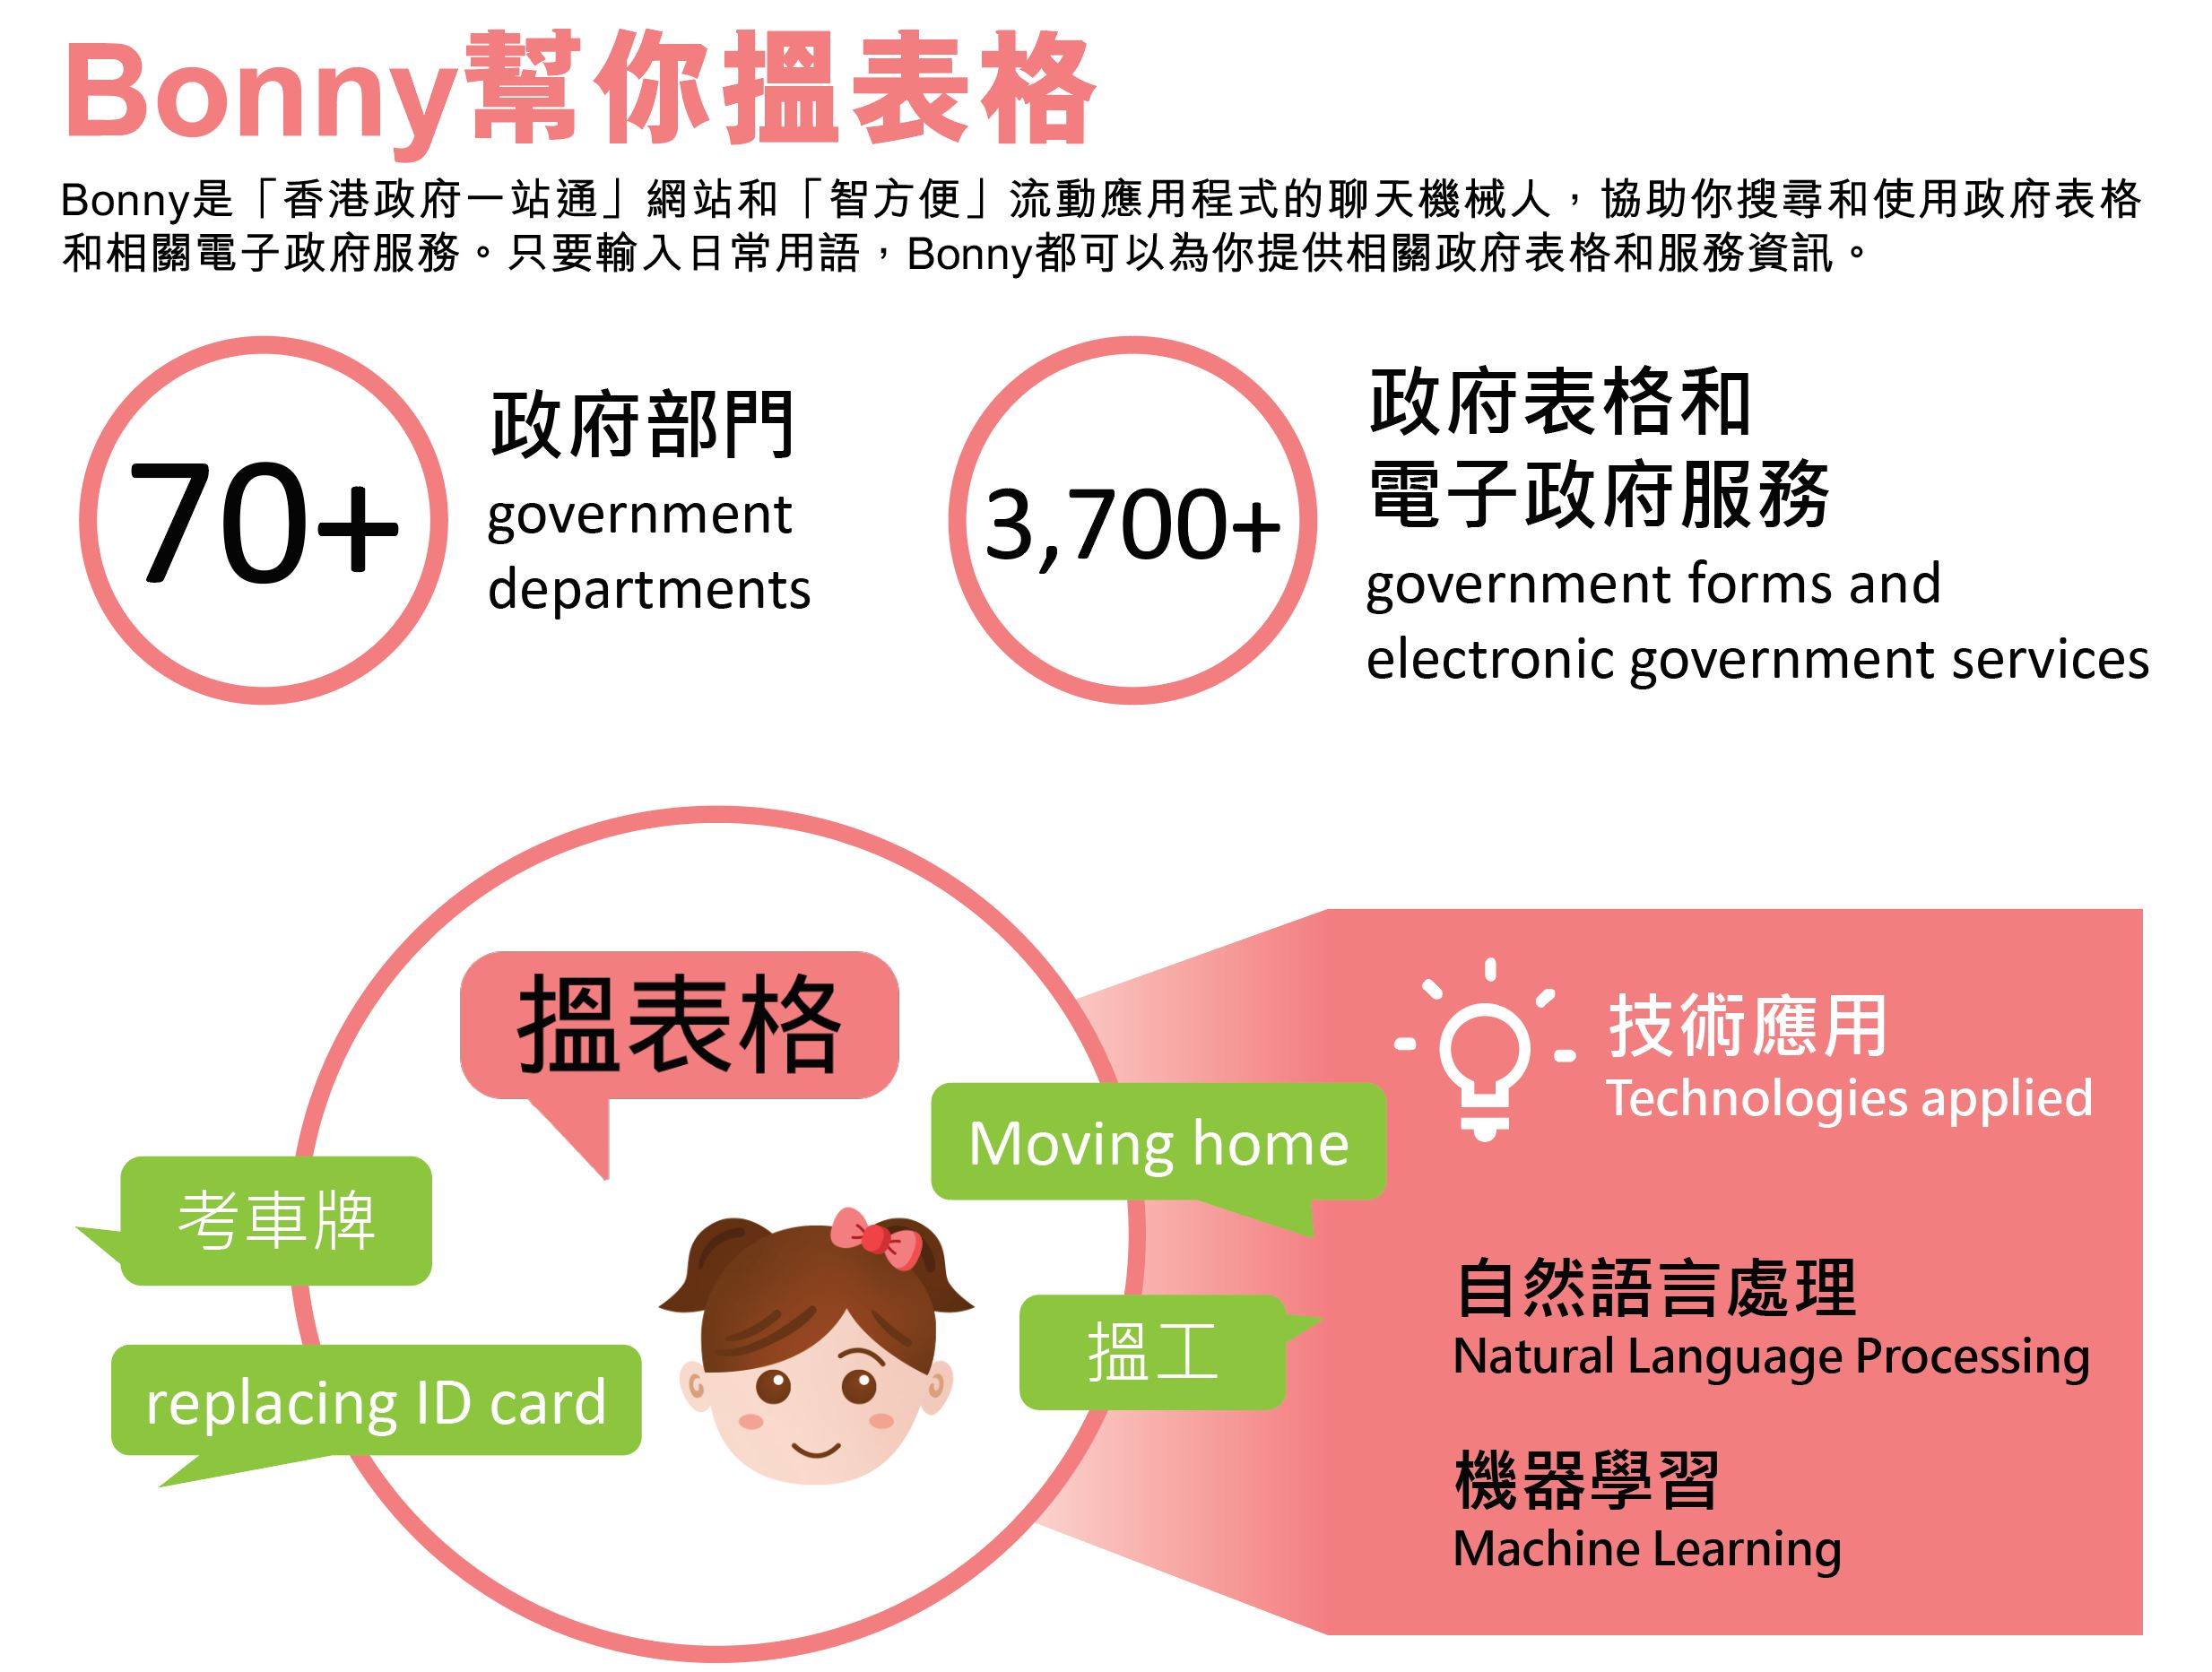 Bonny幫你搵表格，
				Bonny是「香港政府一站通」網站和「智方便」流動應用程式的聊天機械人，協助你搜尋和使用政府表格和相關電子政府服務。只要輸入日常用語，Bonny都可以為你提供相關政府表格和服務資訊。